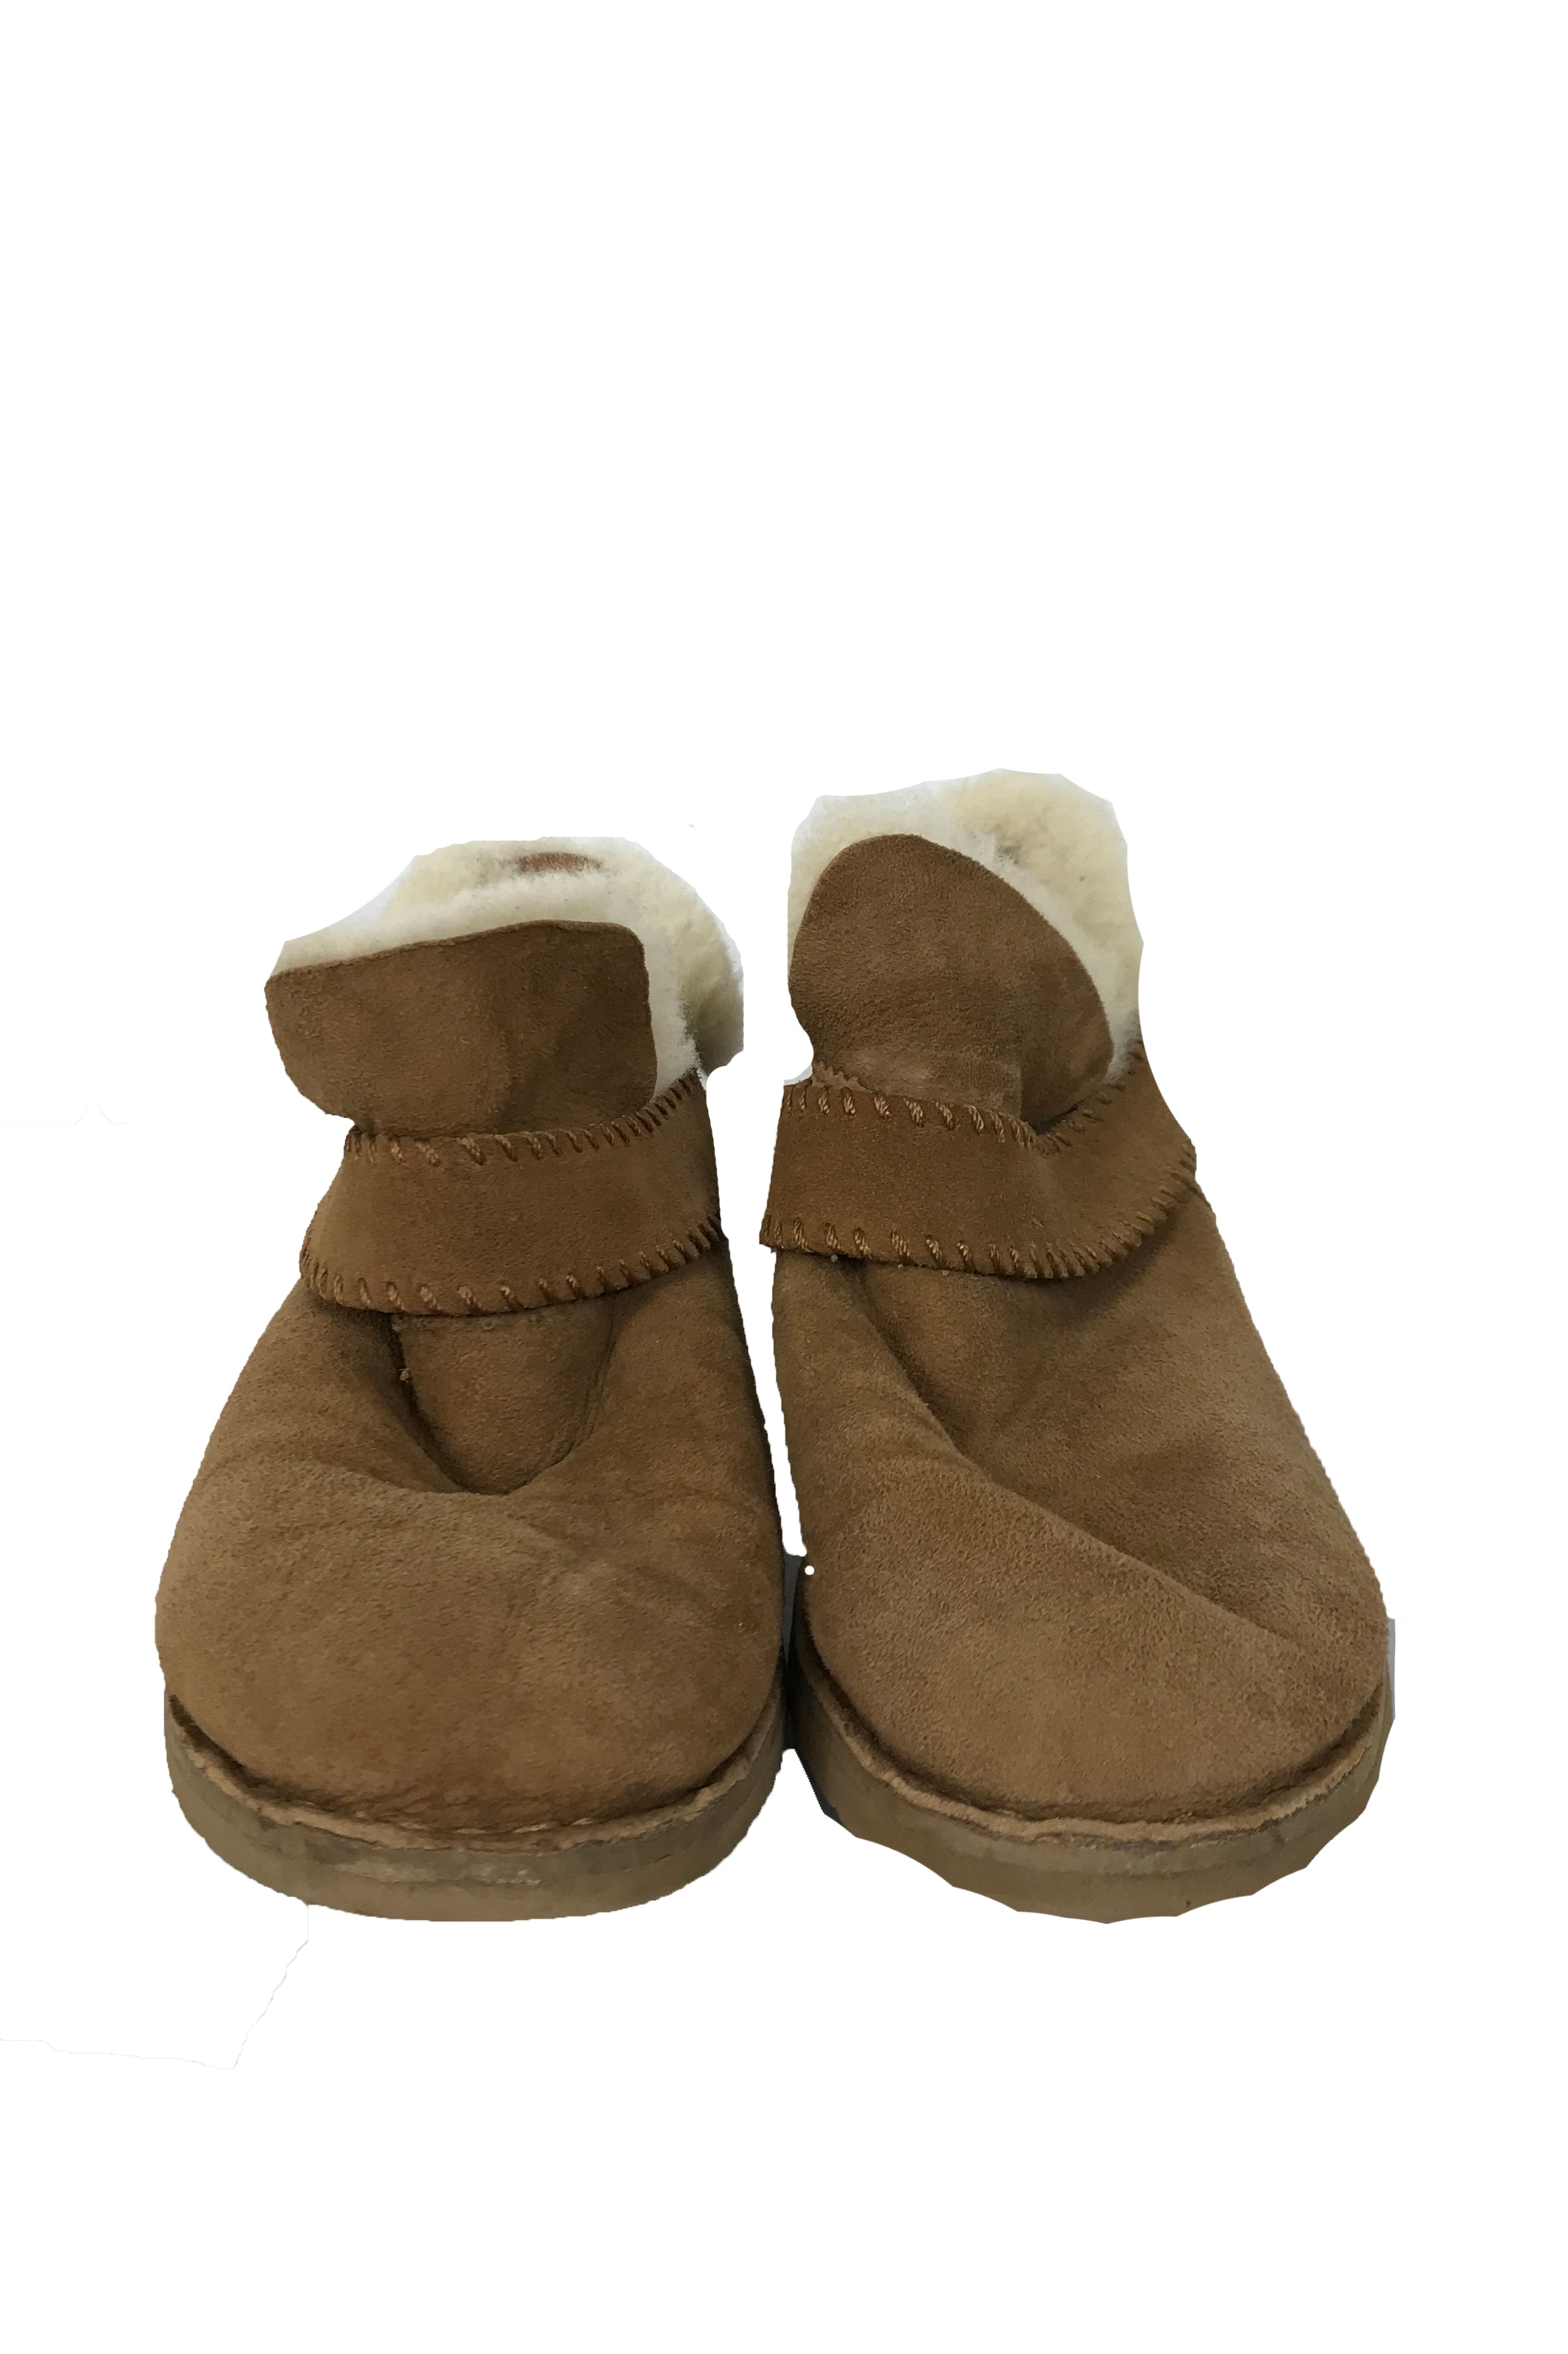 Ugg Women's McKay Winter Boots Chestnut Size 7